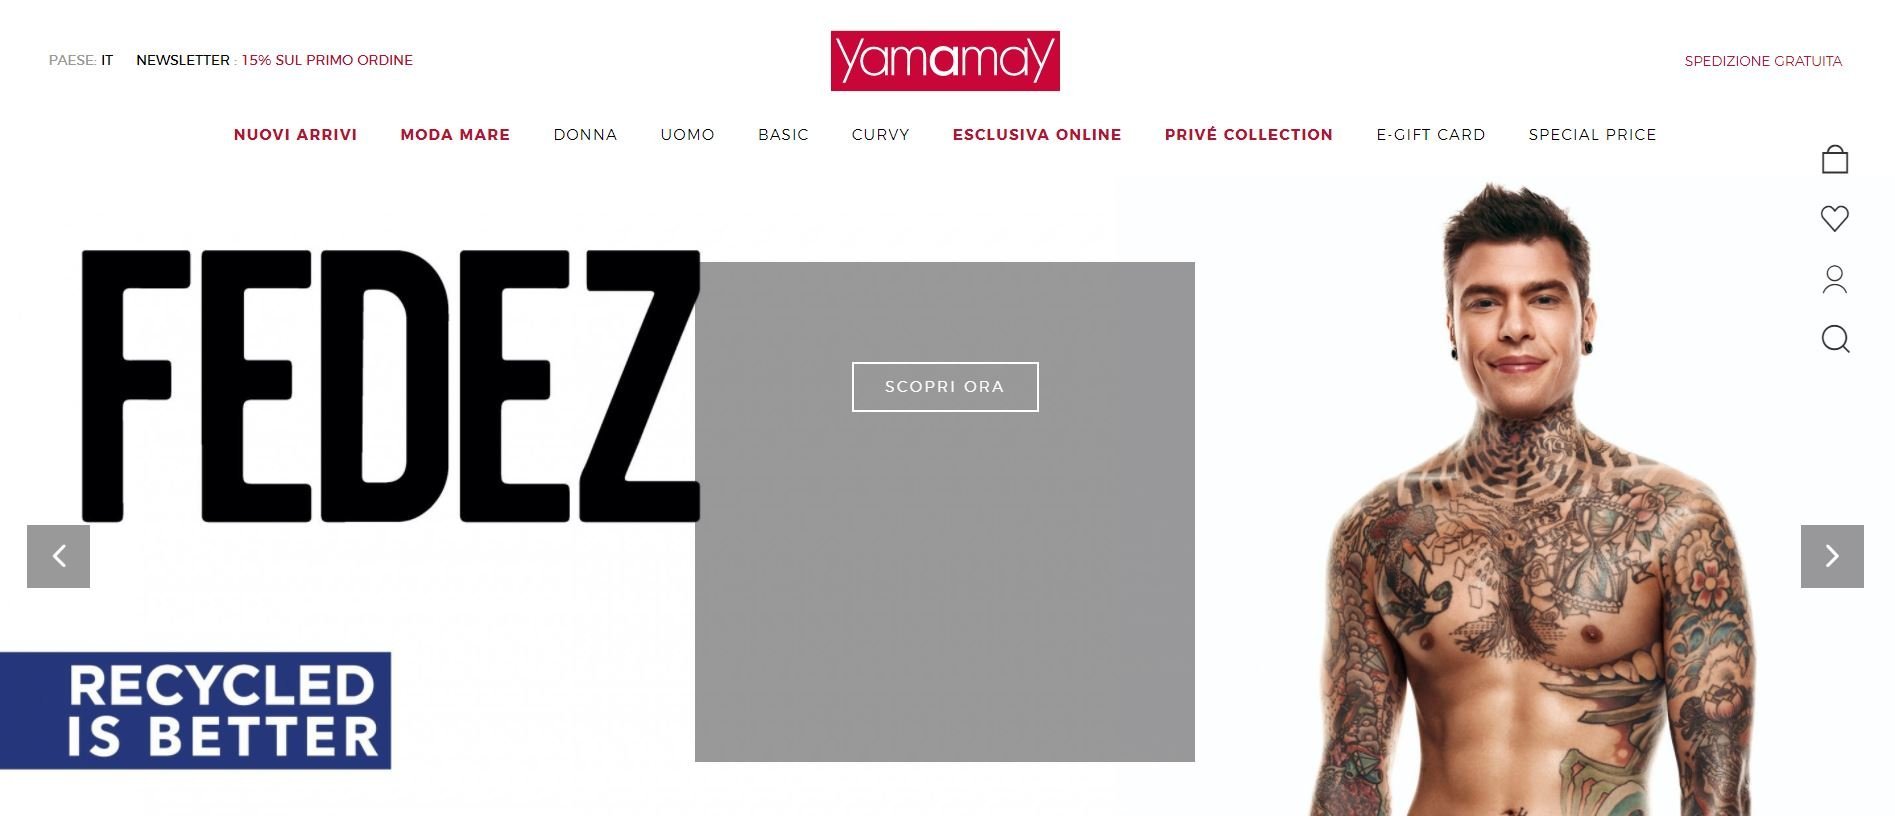 Yammay купити онлайн з доставкою в Україну - Meest Shopping - 2